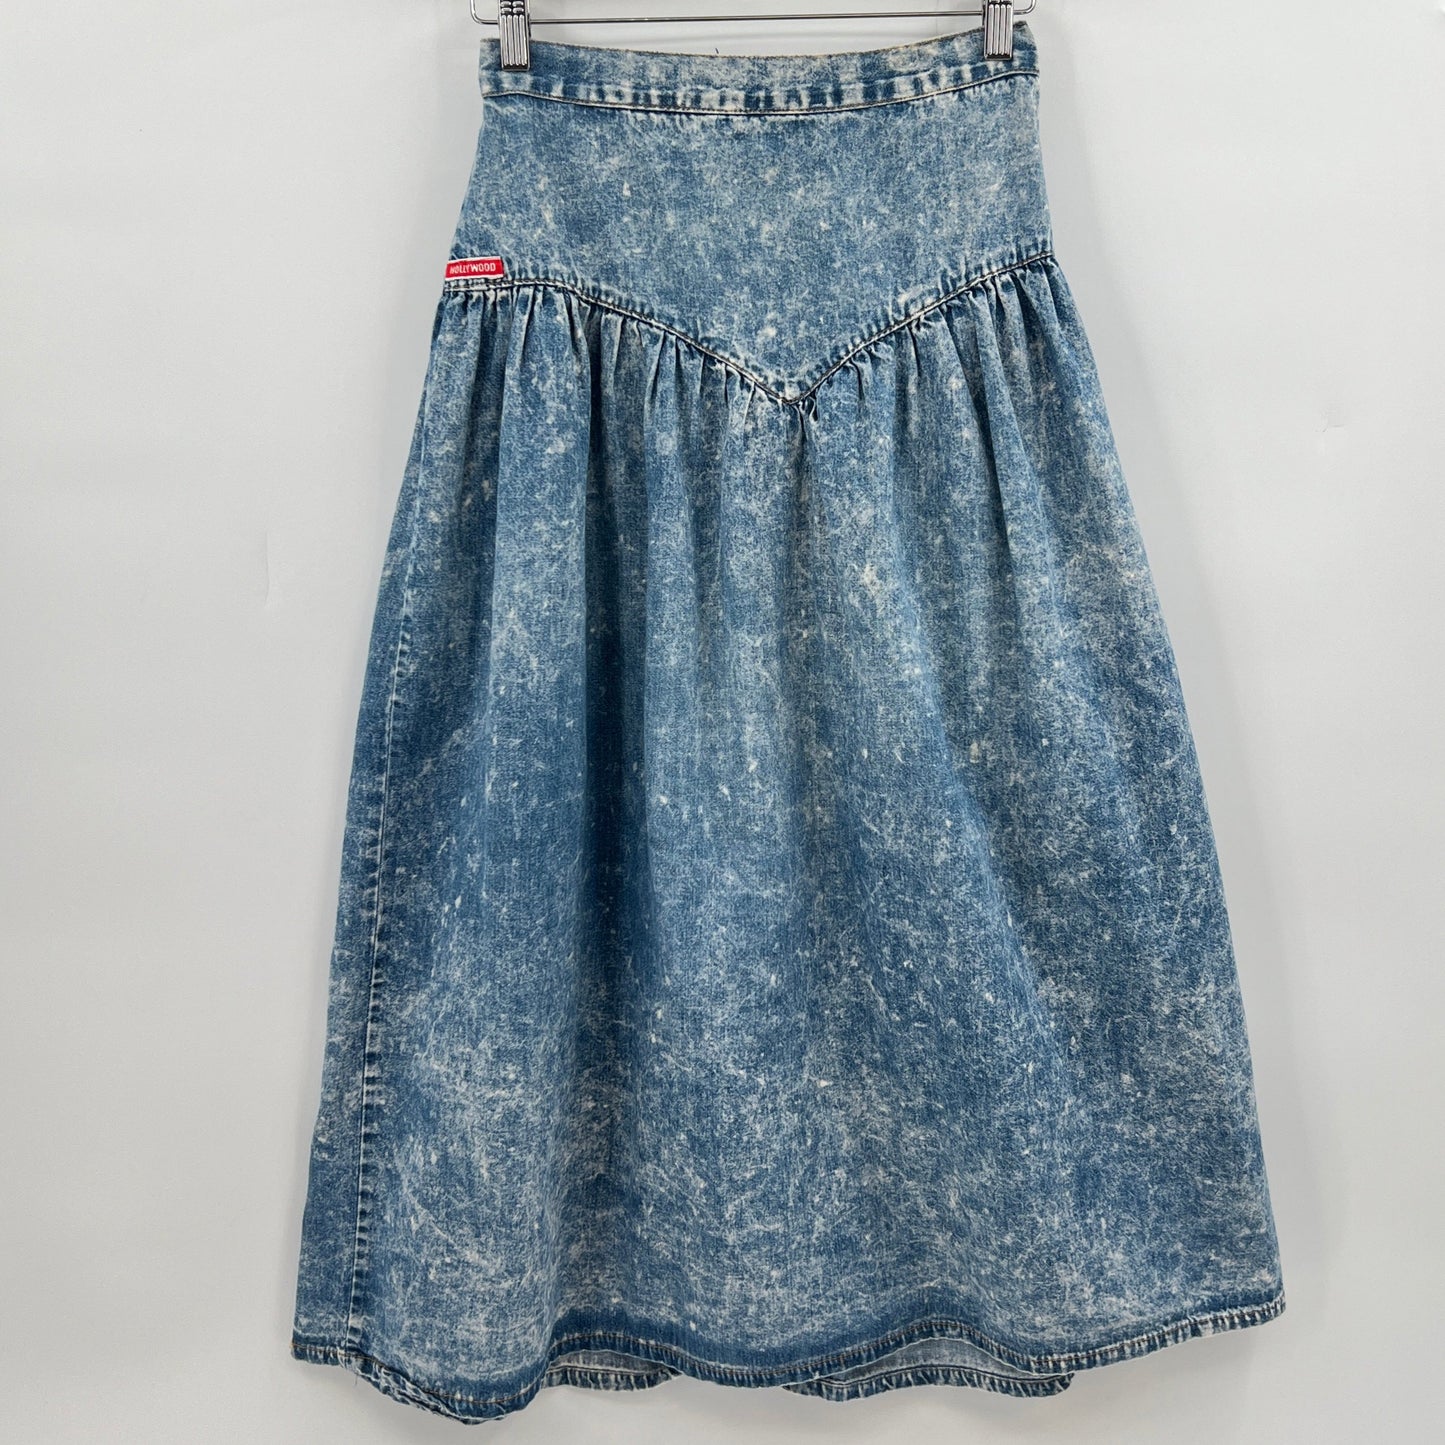 Vintage Hollywood Acid Wash Skirt XS/S